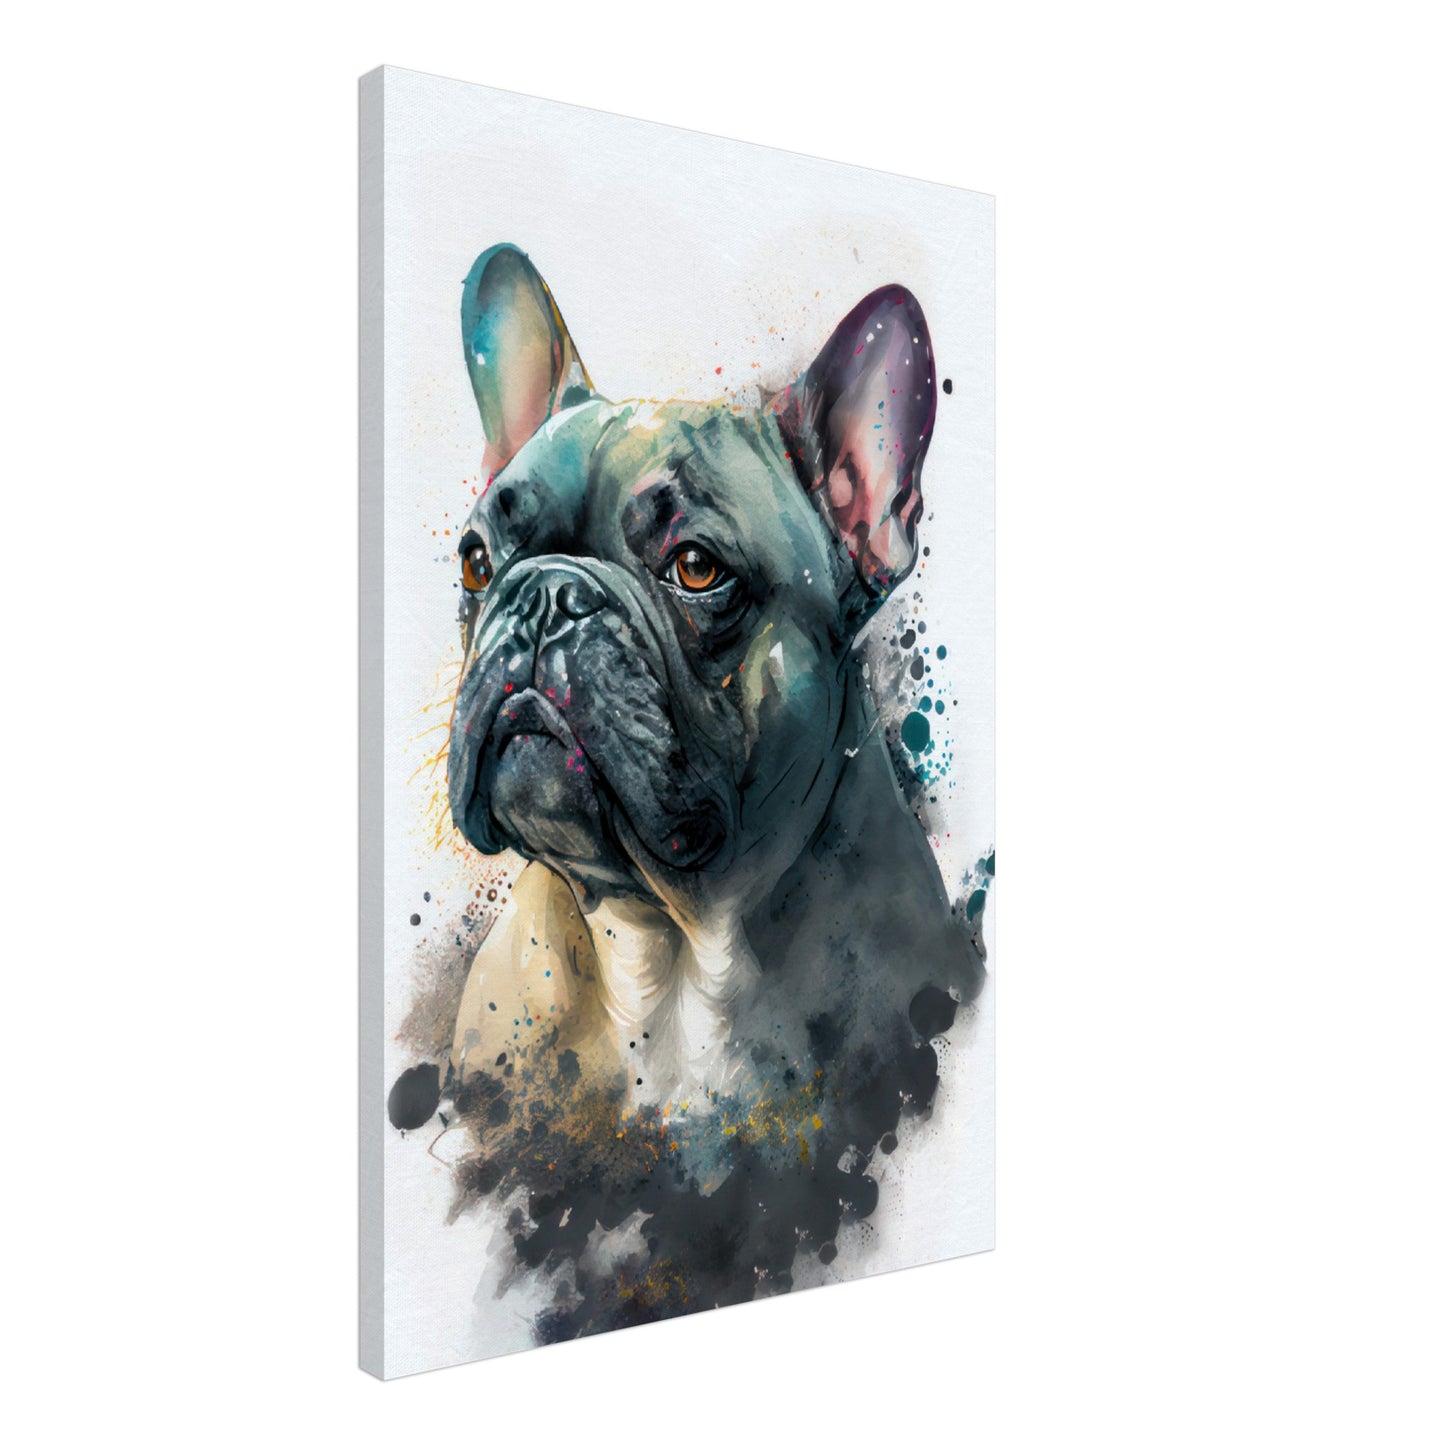 Französische Bulldoge Milo - Hunde Wandbild - Dogs Art Leinwand WaterColors im Hochformat - Hundebilder Hundeportrait Tiere Tierbilder Kunstdruck Aquarell